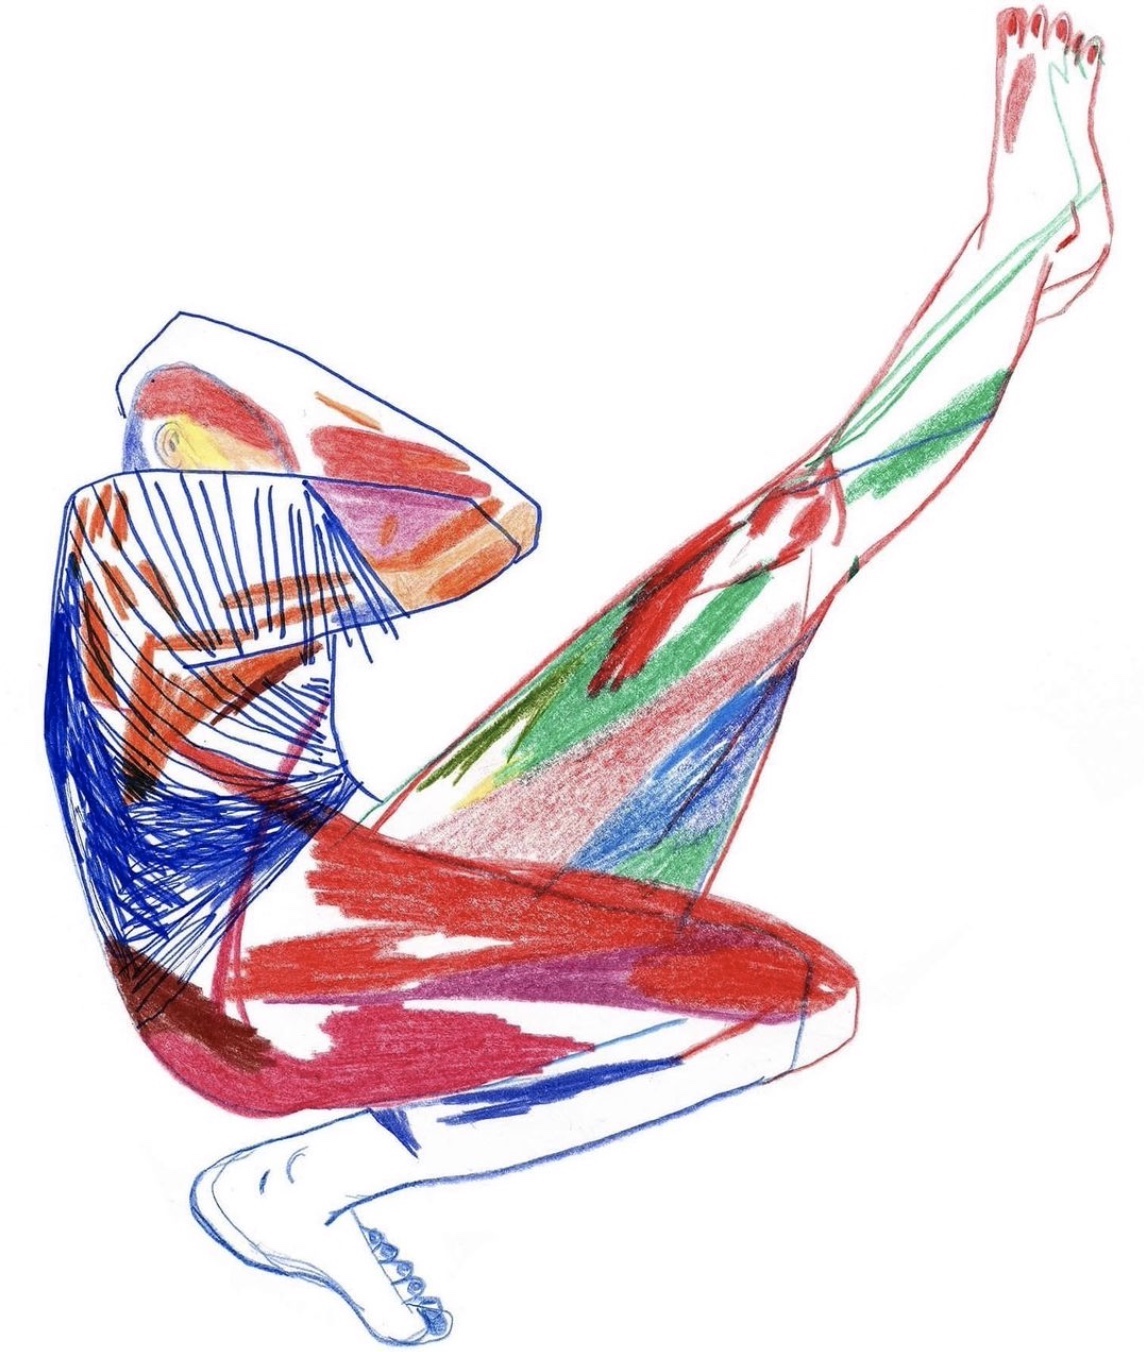 Louise Doumenf, dessin danse